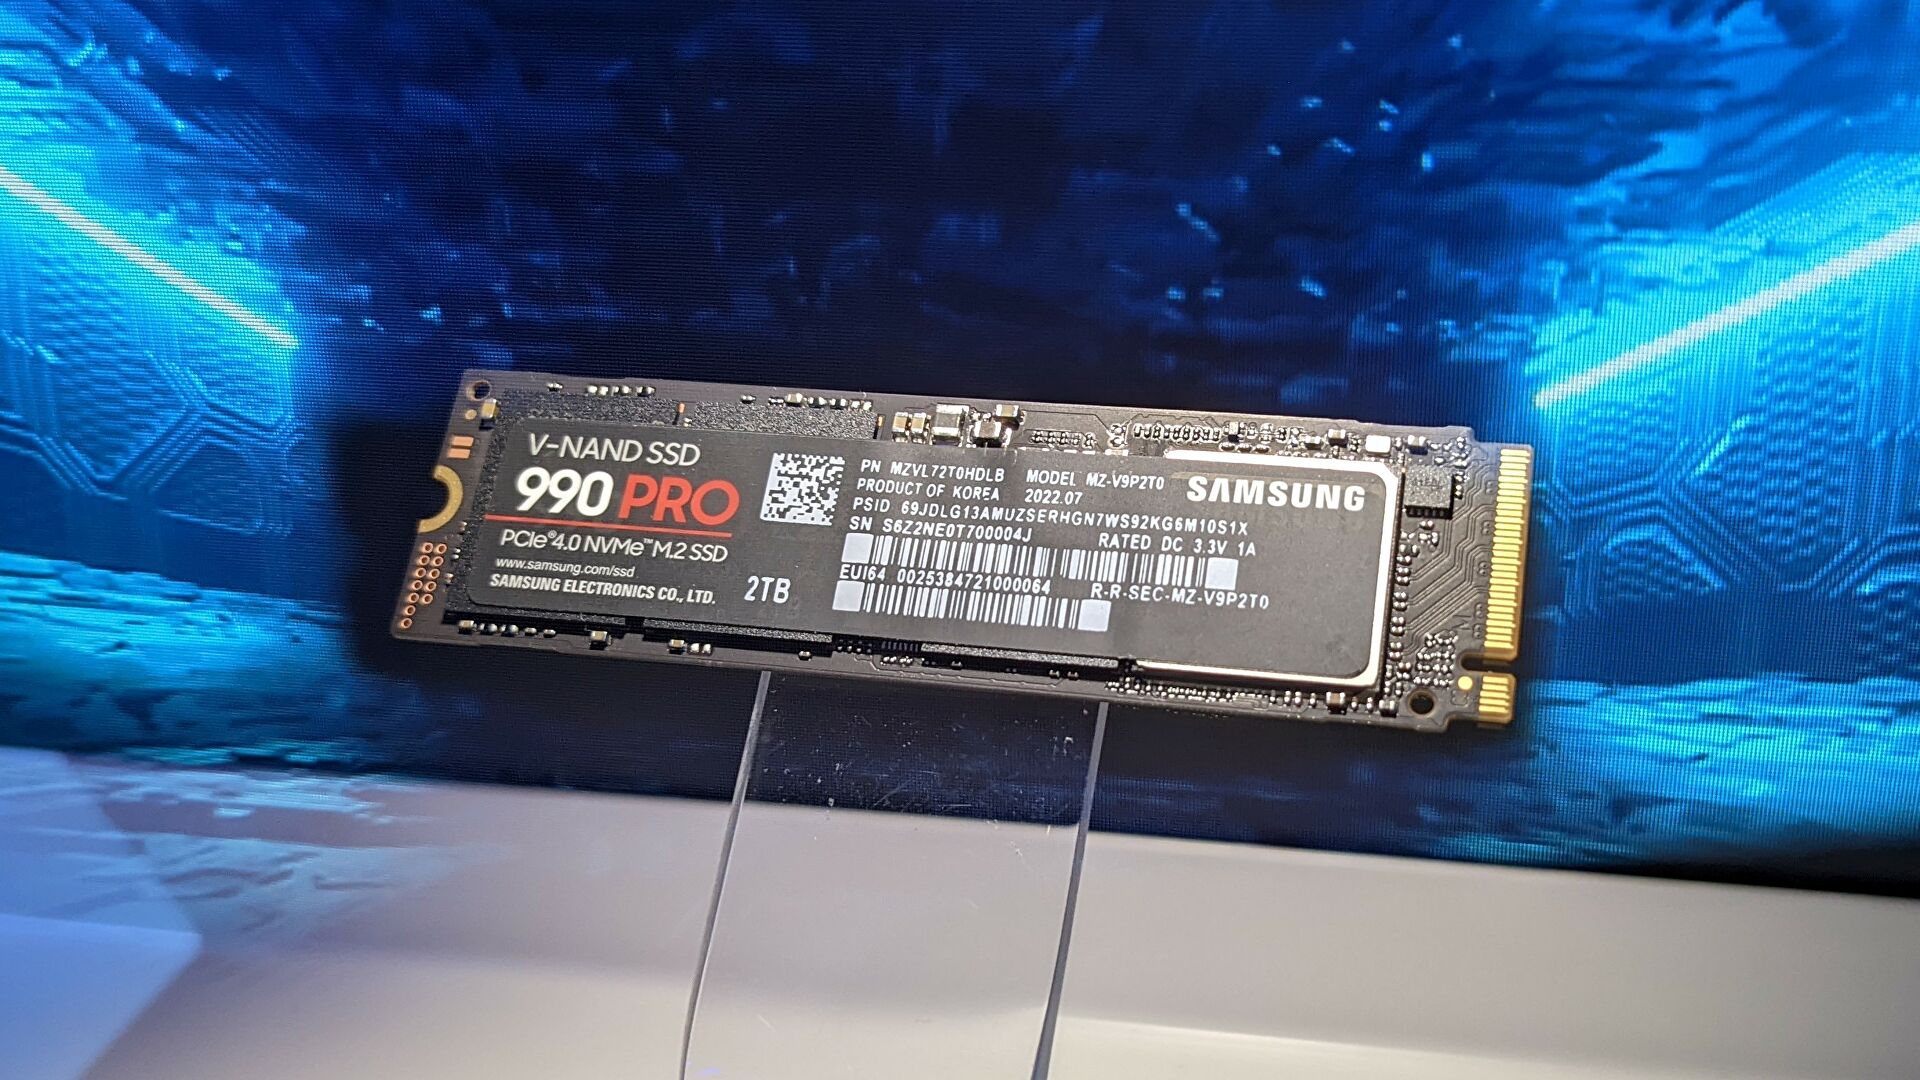 "Samsung 990 Pro"